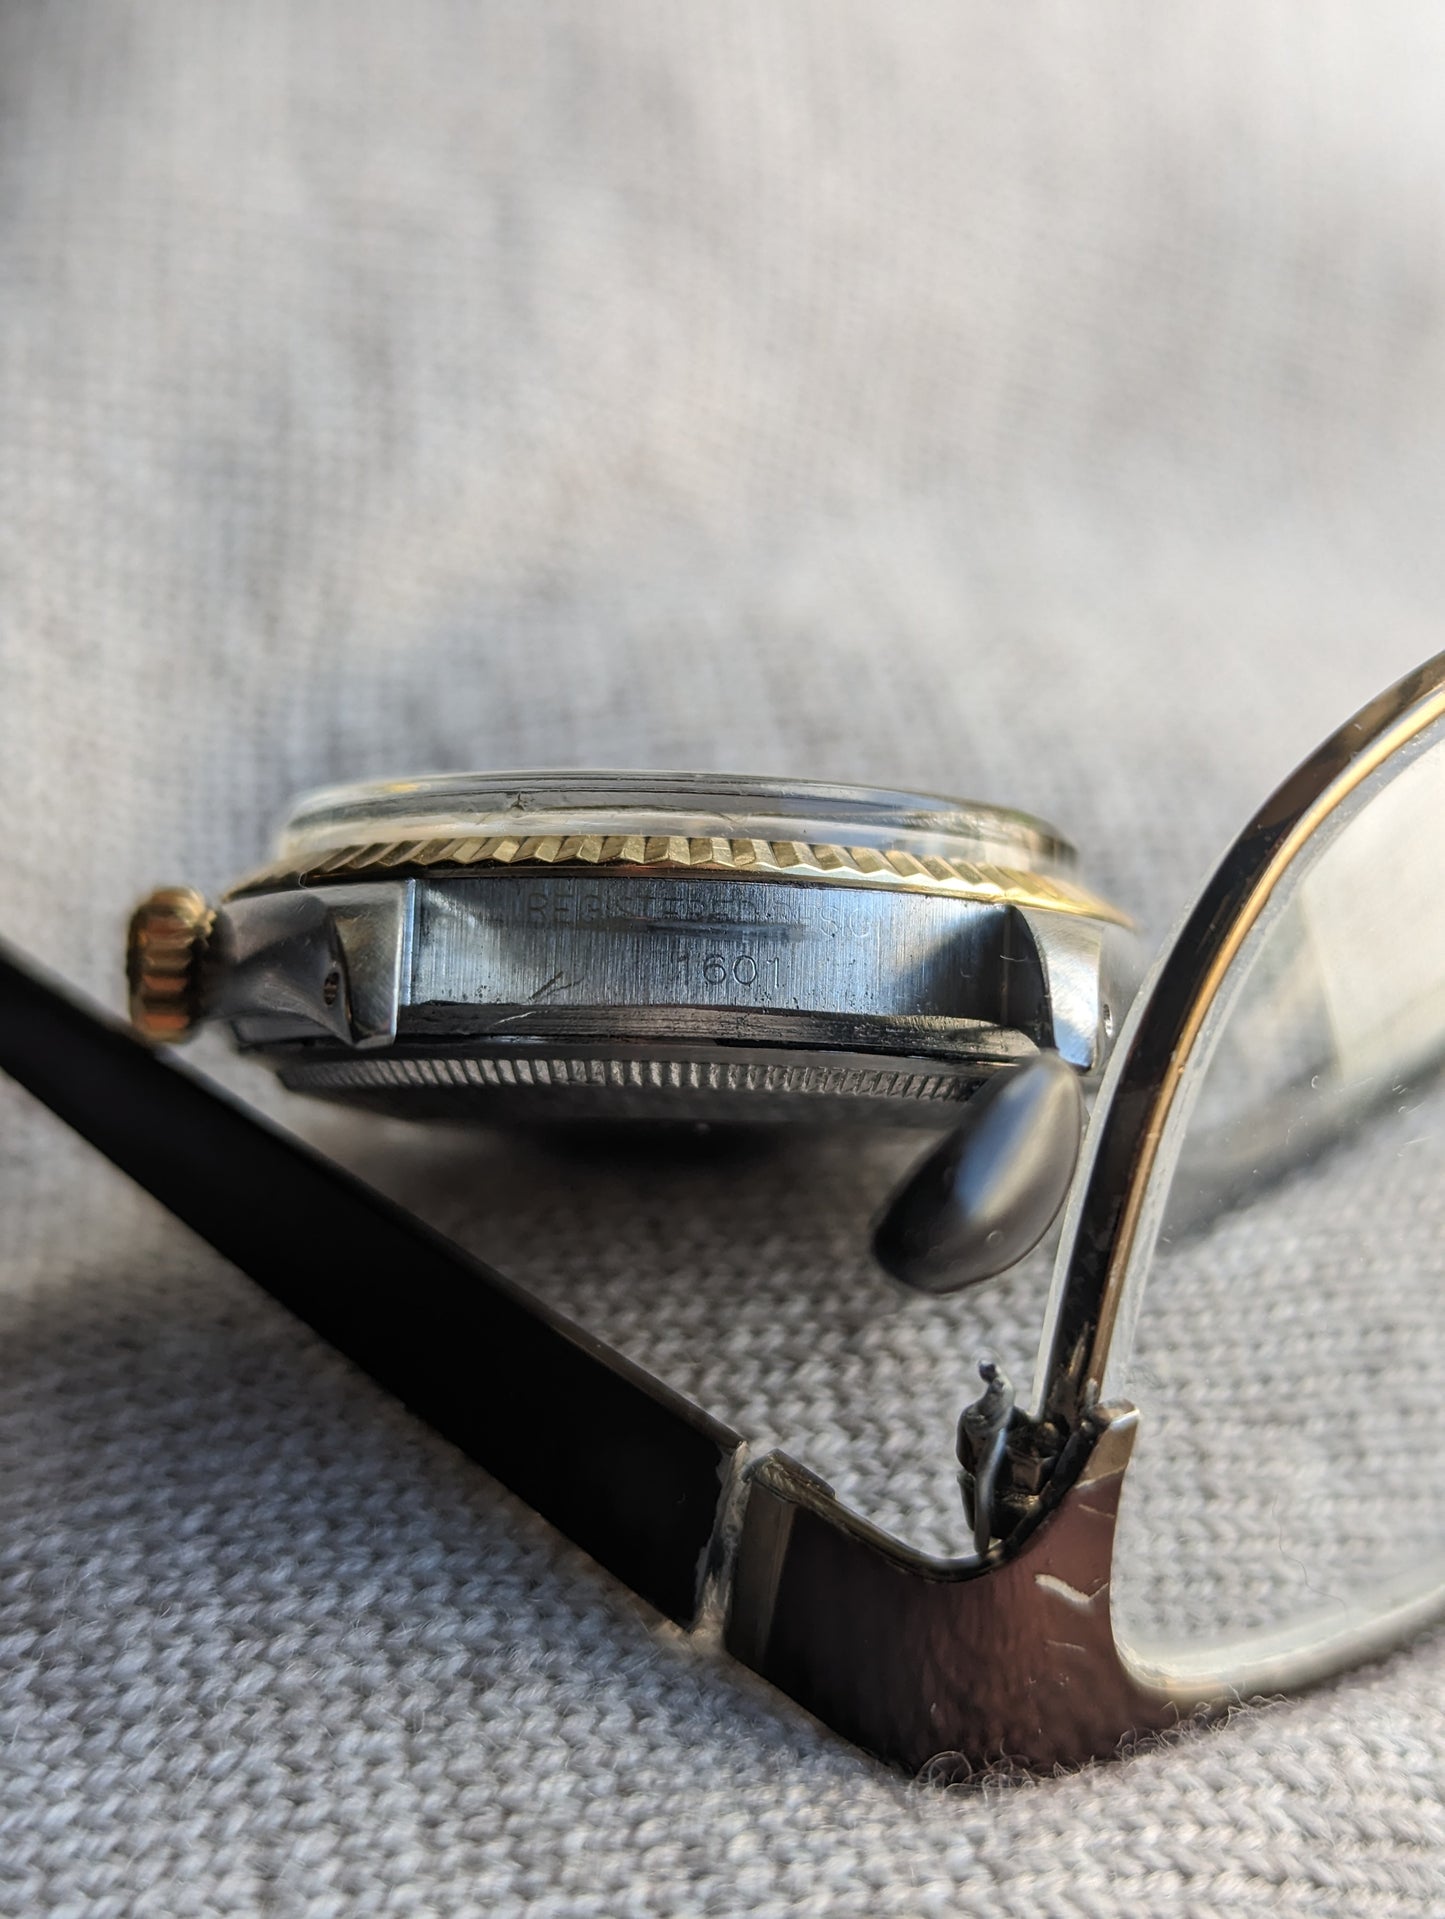 Vintage Rolex Datejust 1601 -  Serviced w/ 1 year warranty.